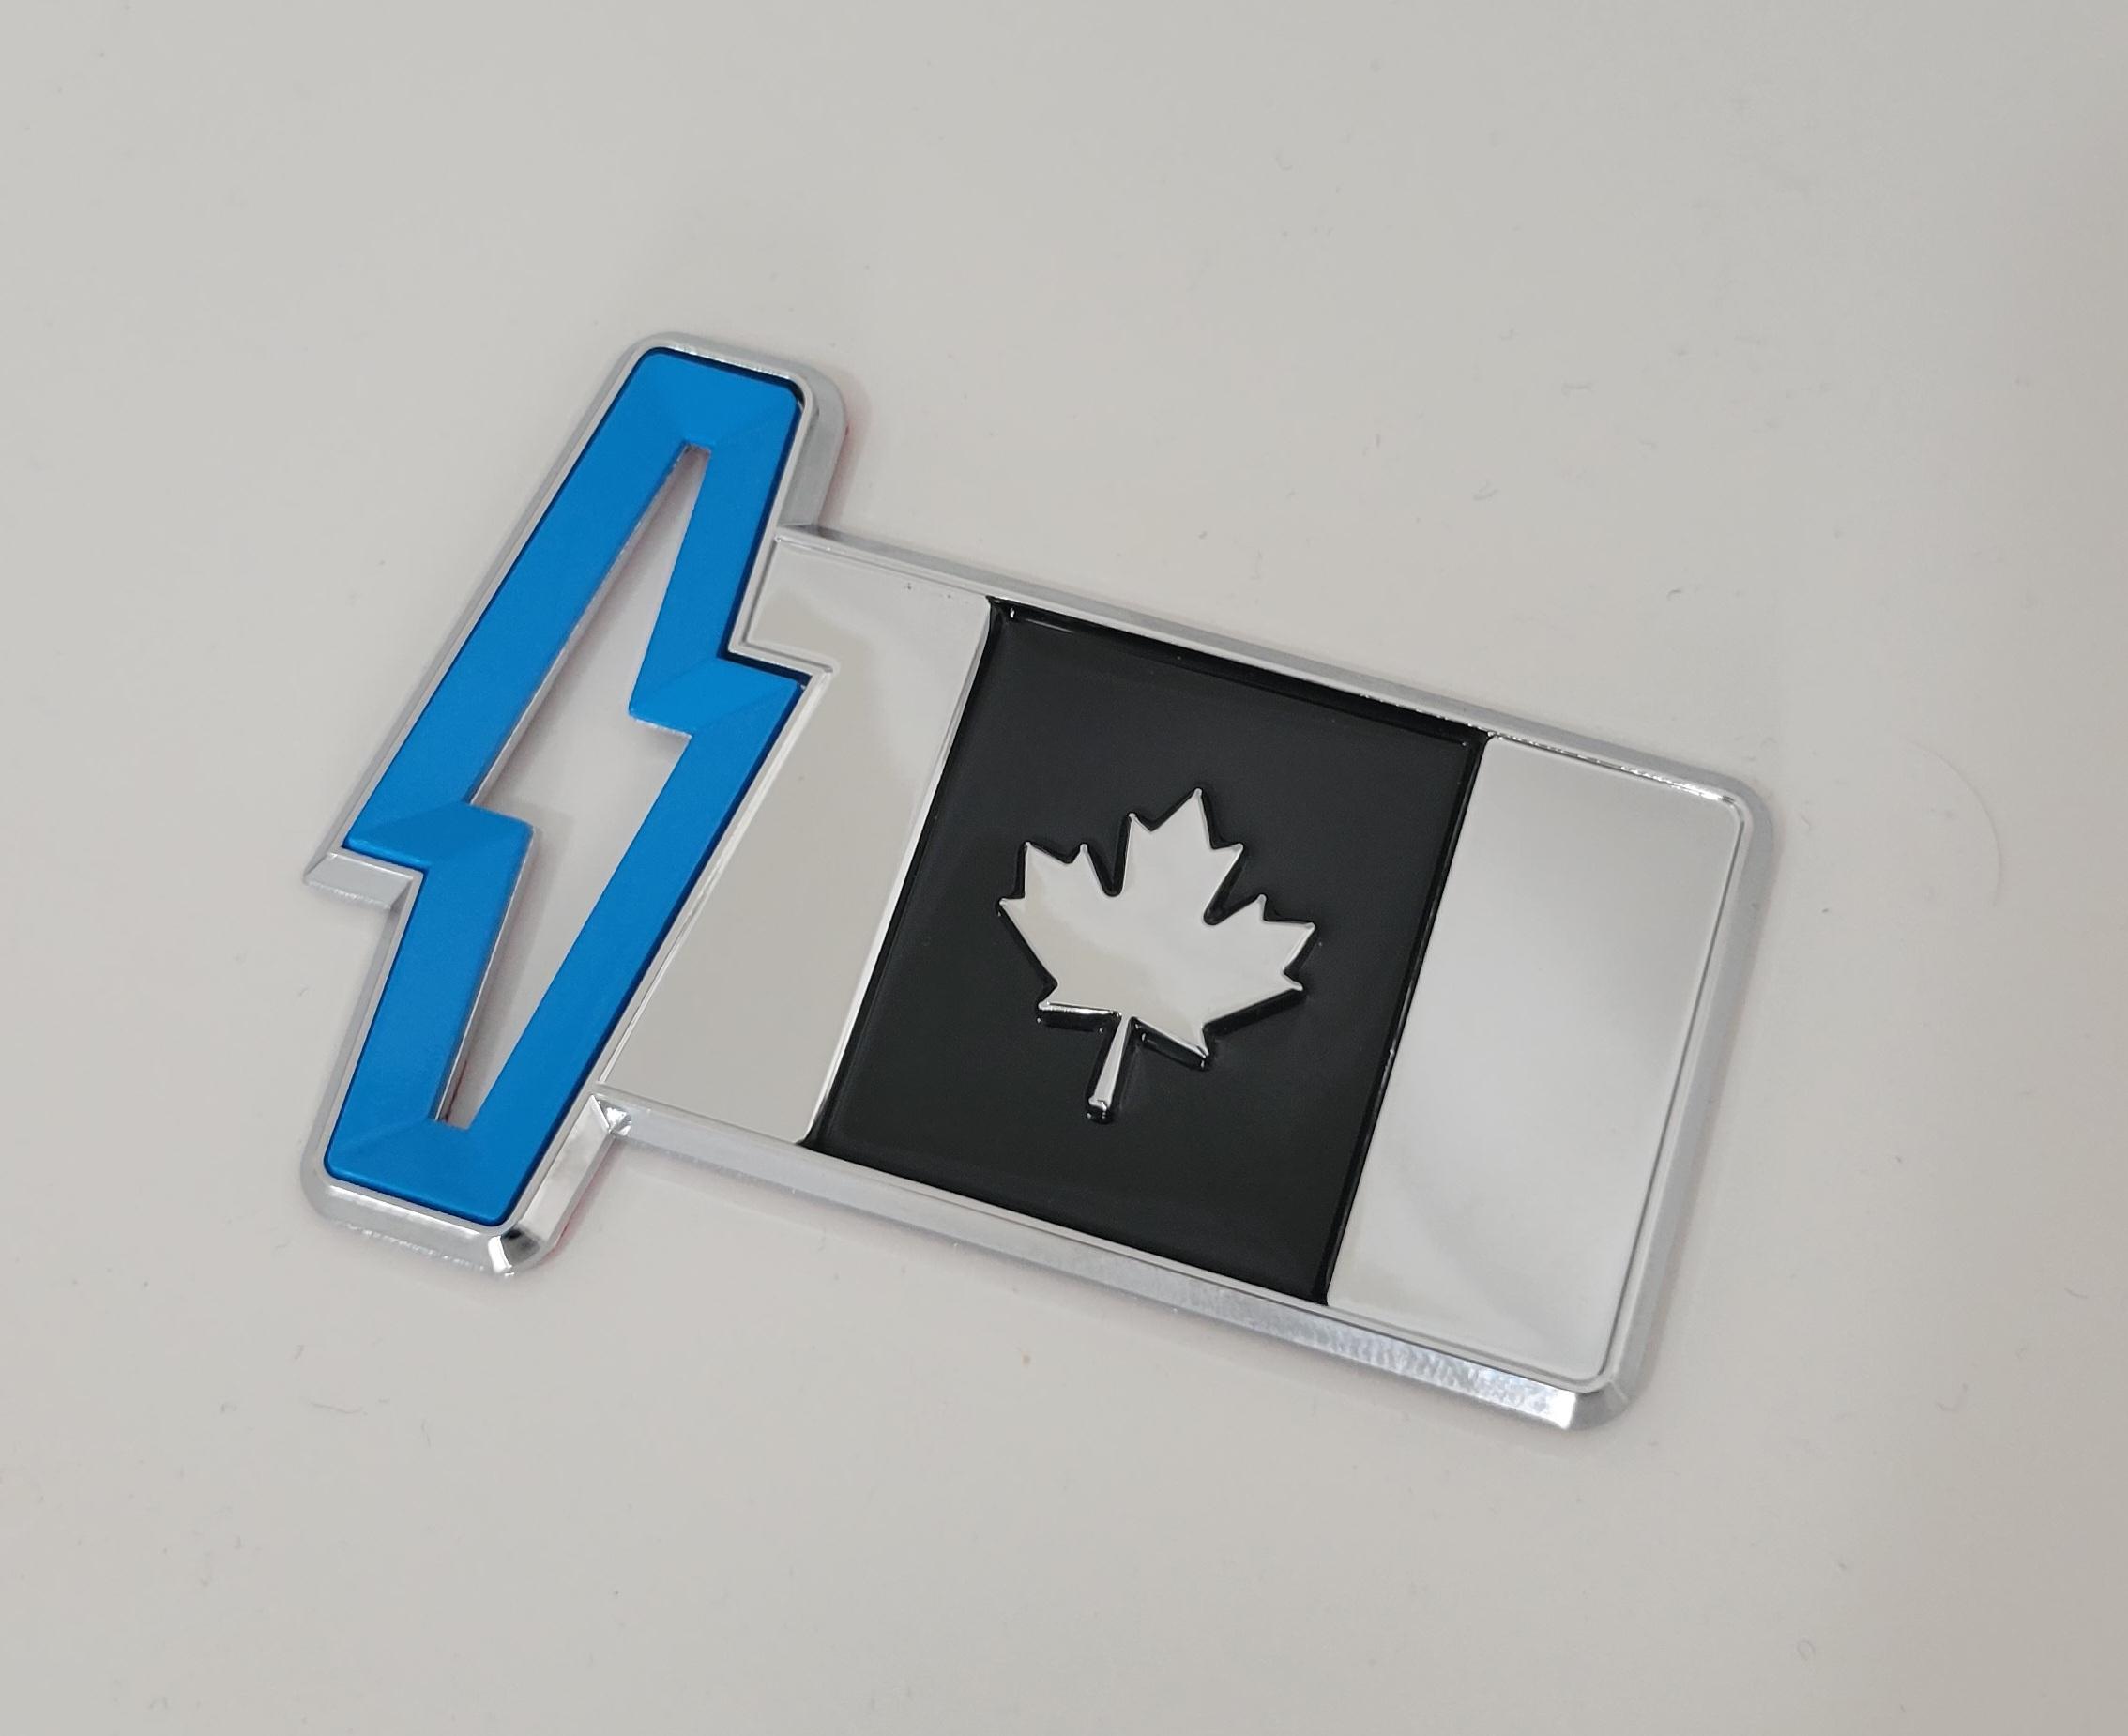 Ford F-150 Lightning no American flag on Canadian models? 20230907_141735